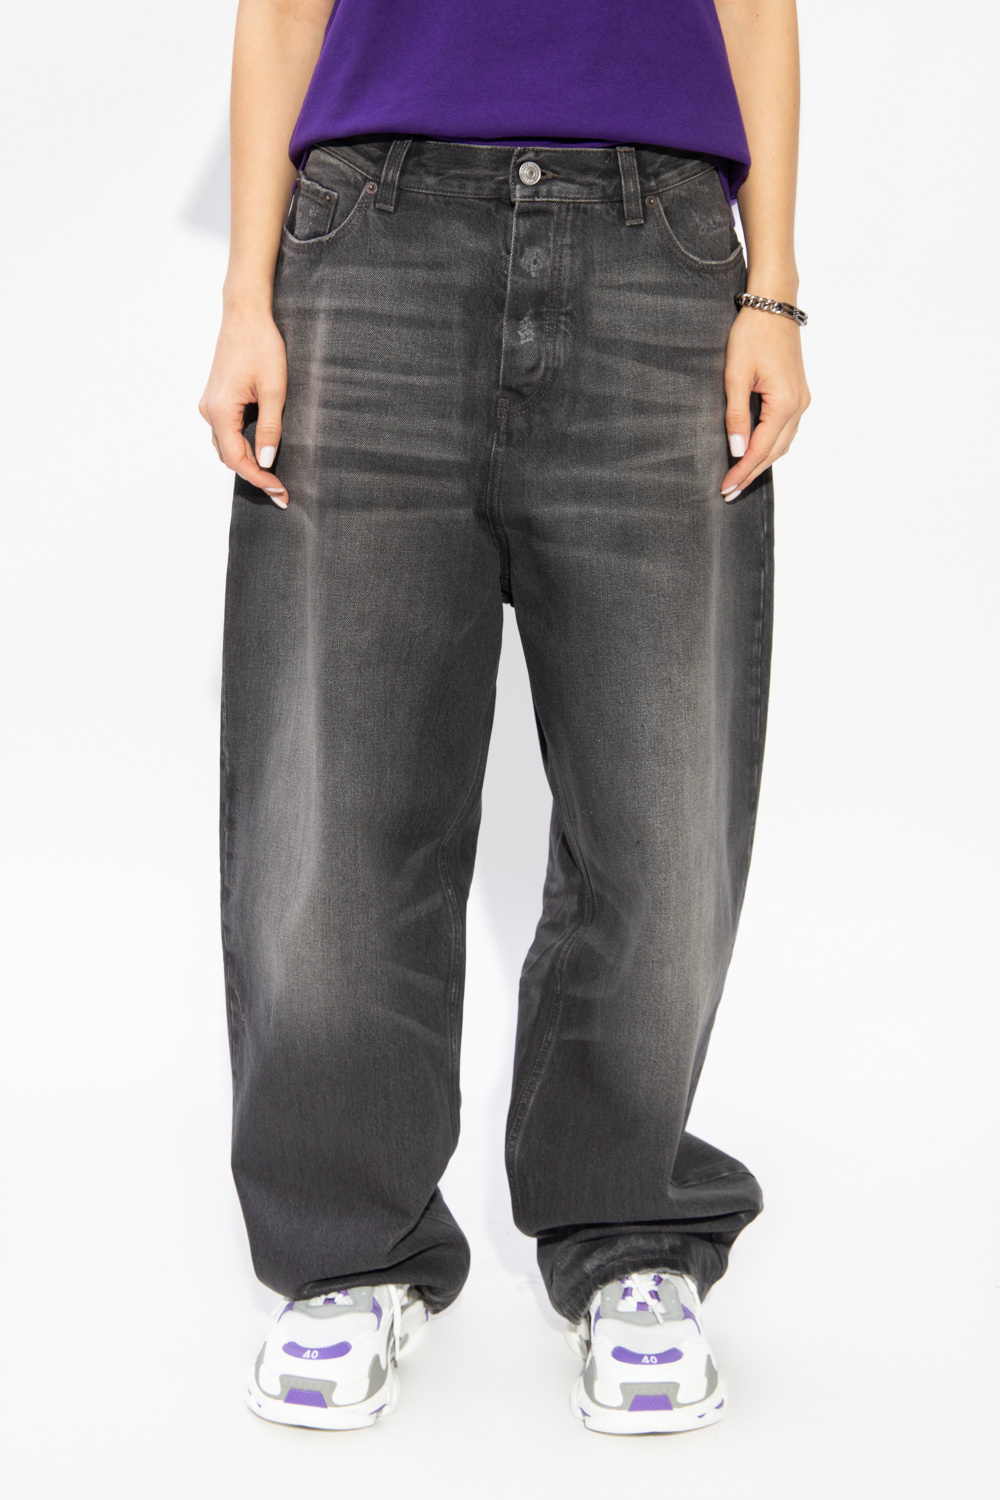 De-iceShops Japan - Baggy jeans Balenciaga - Superdry Jean style 